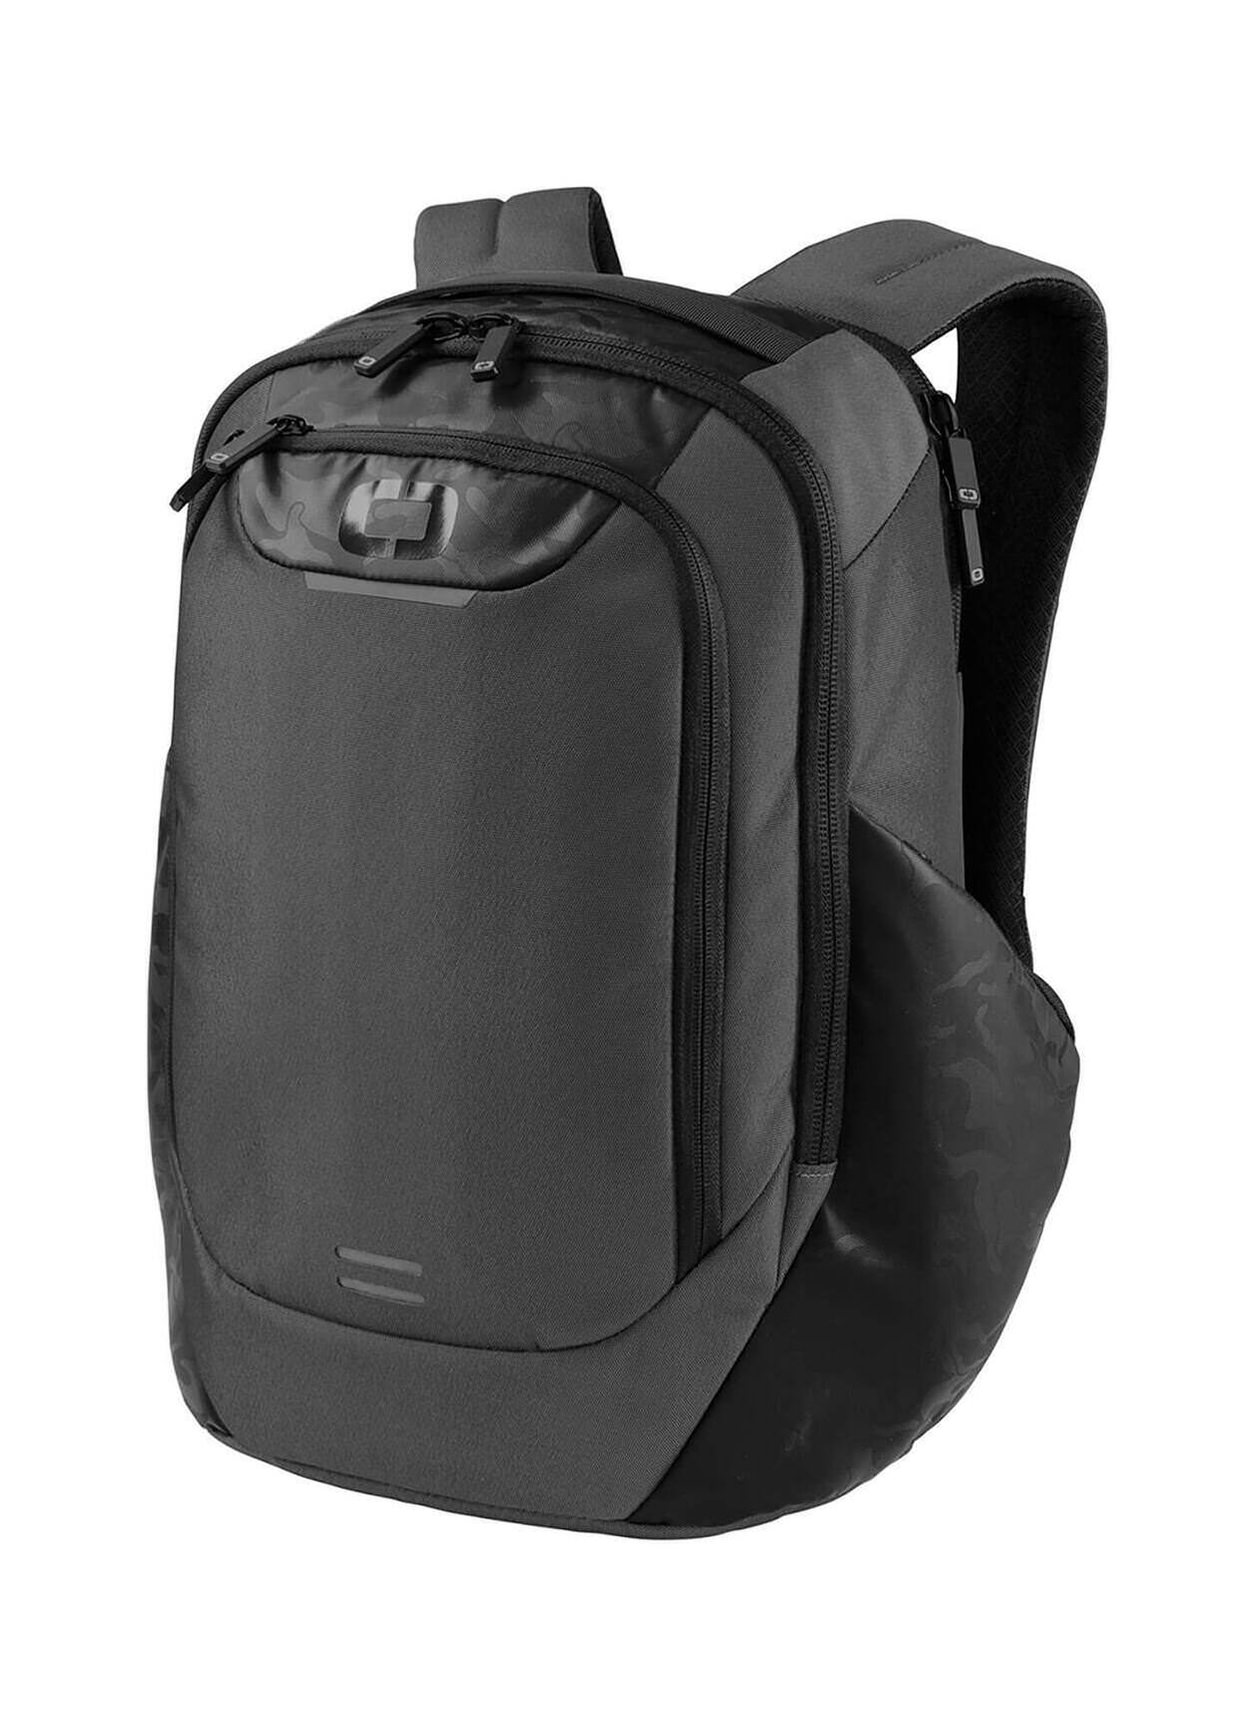 OGIO Tarmac Monolithic Backpack